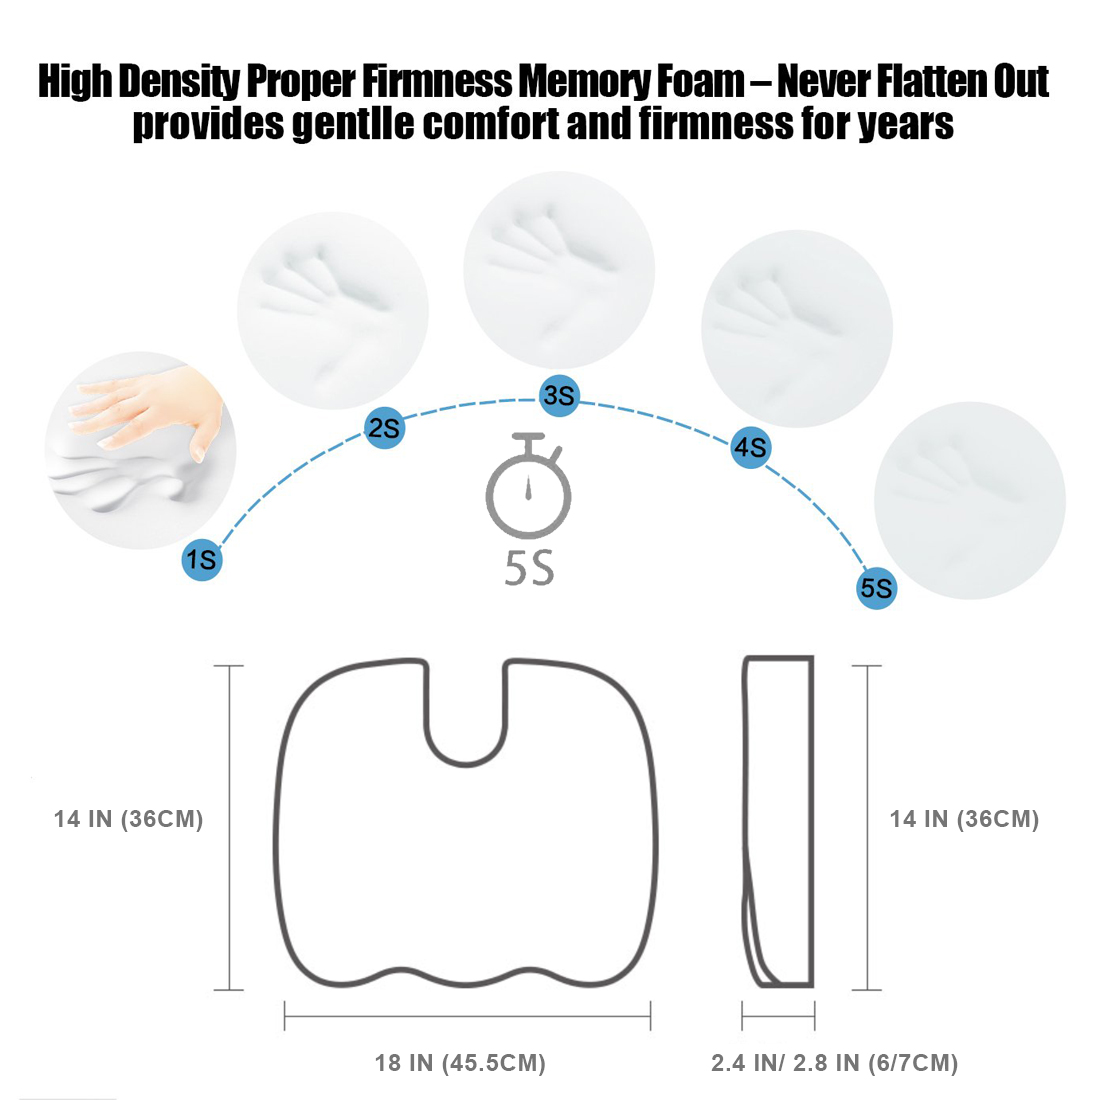 Gray Premium Orthopedic Memory Foam Seat Cushion Coccyx Tailbone